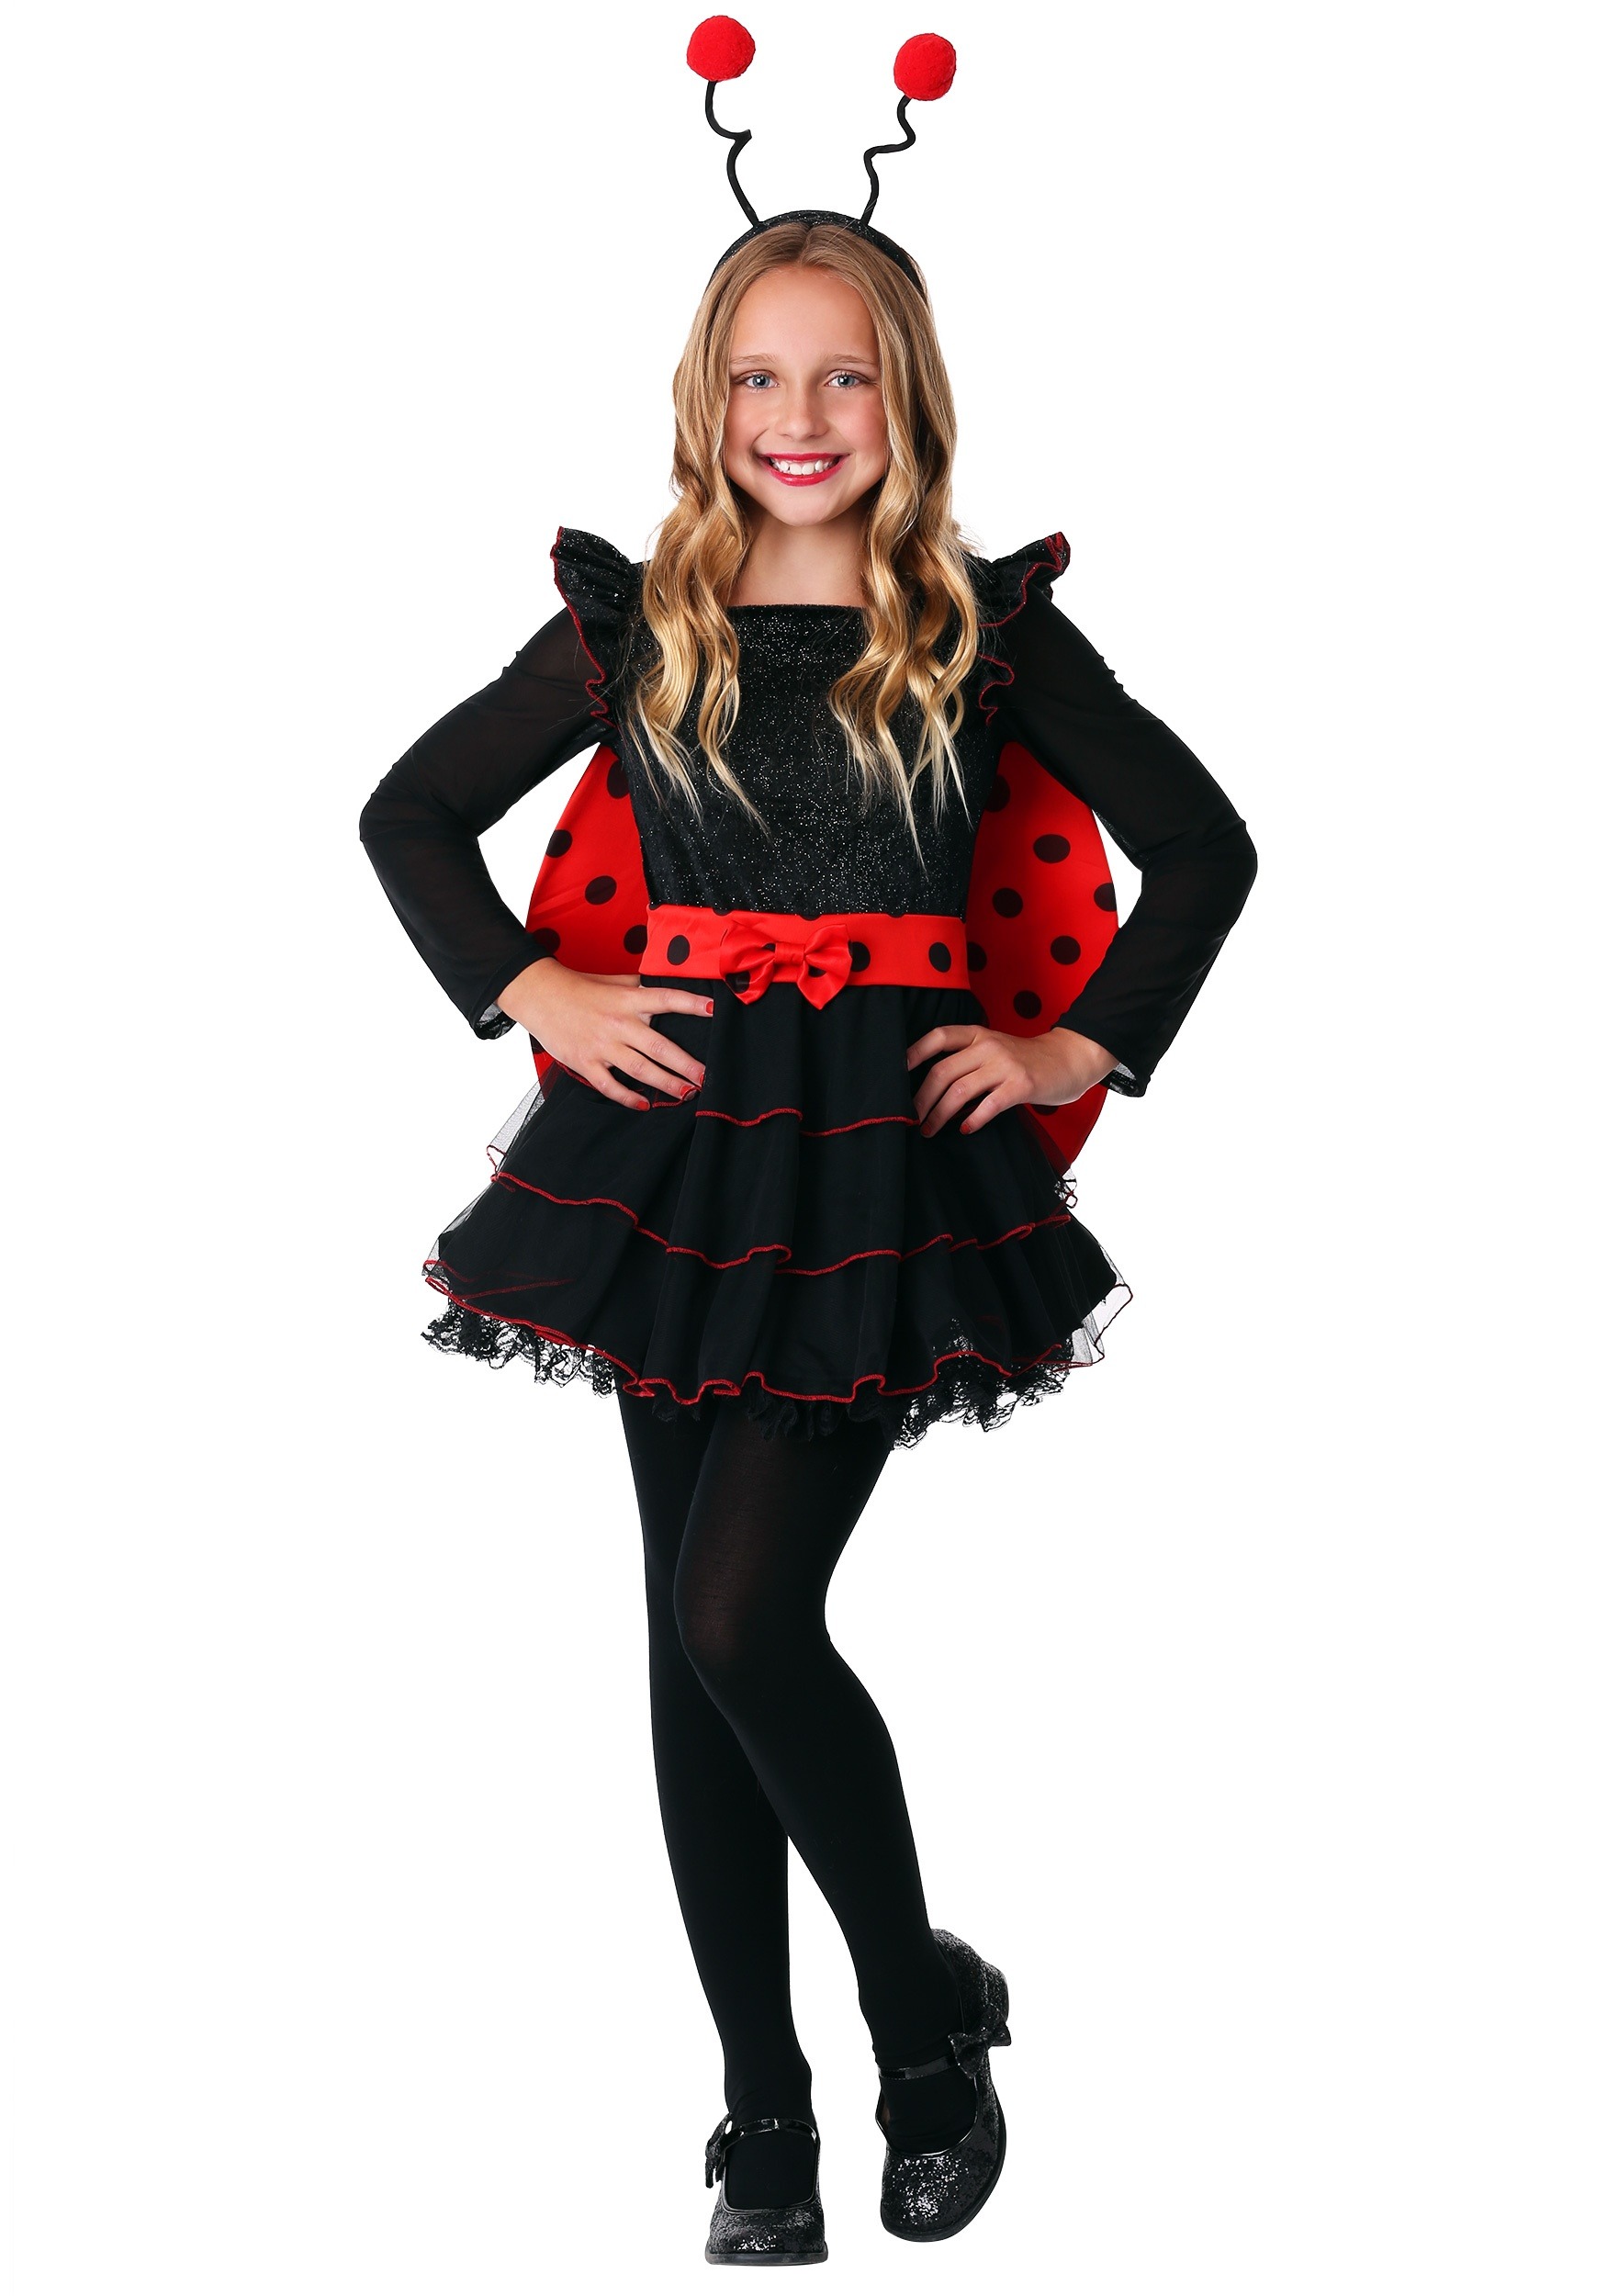 Photos - Fancy Dress FUN Costumes Sweet Ladybug Girl's Costume Black/Red